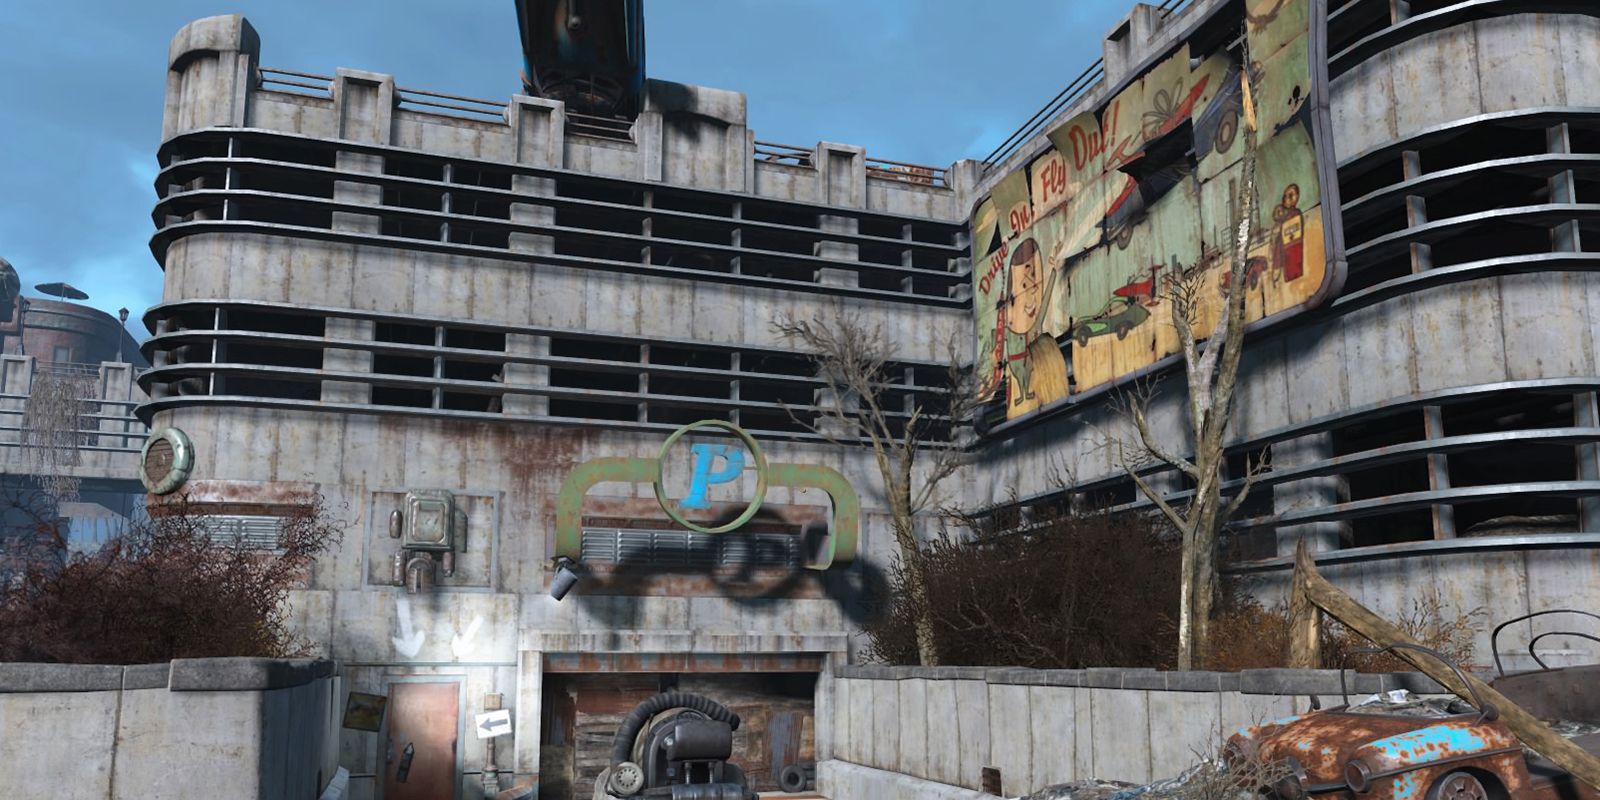 Fallout 4 Parking Garage Dungeon